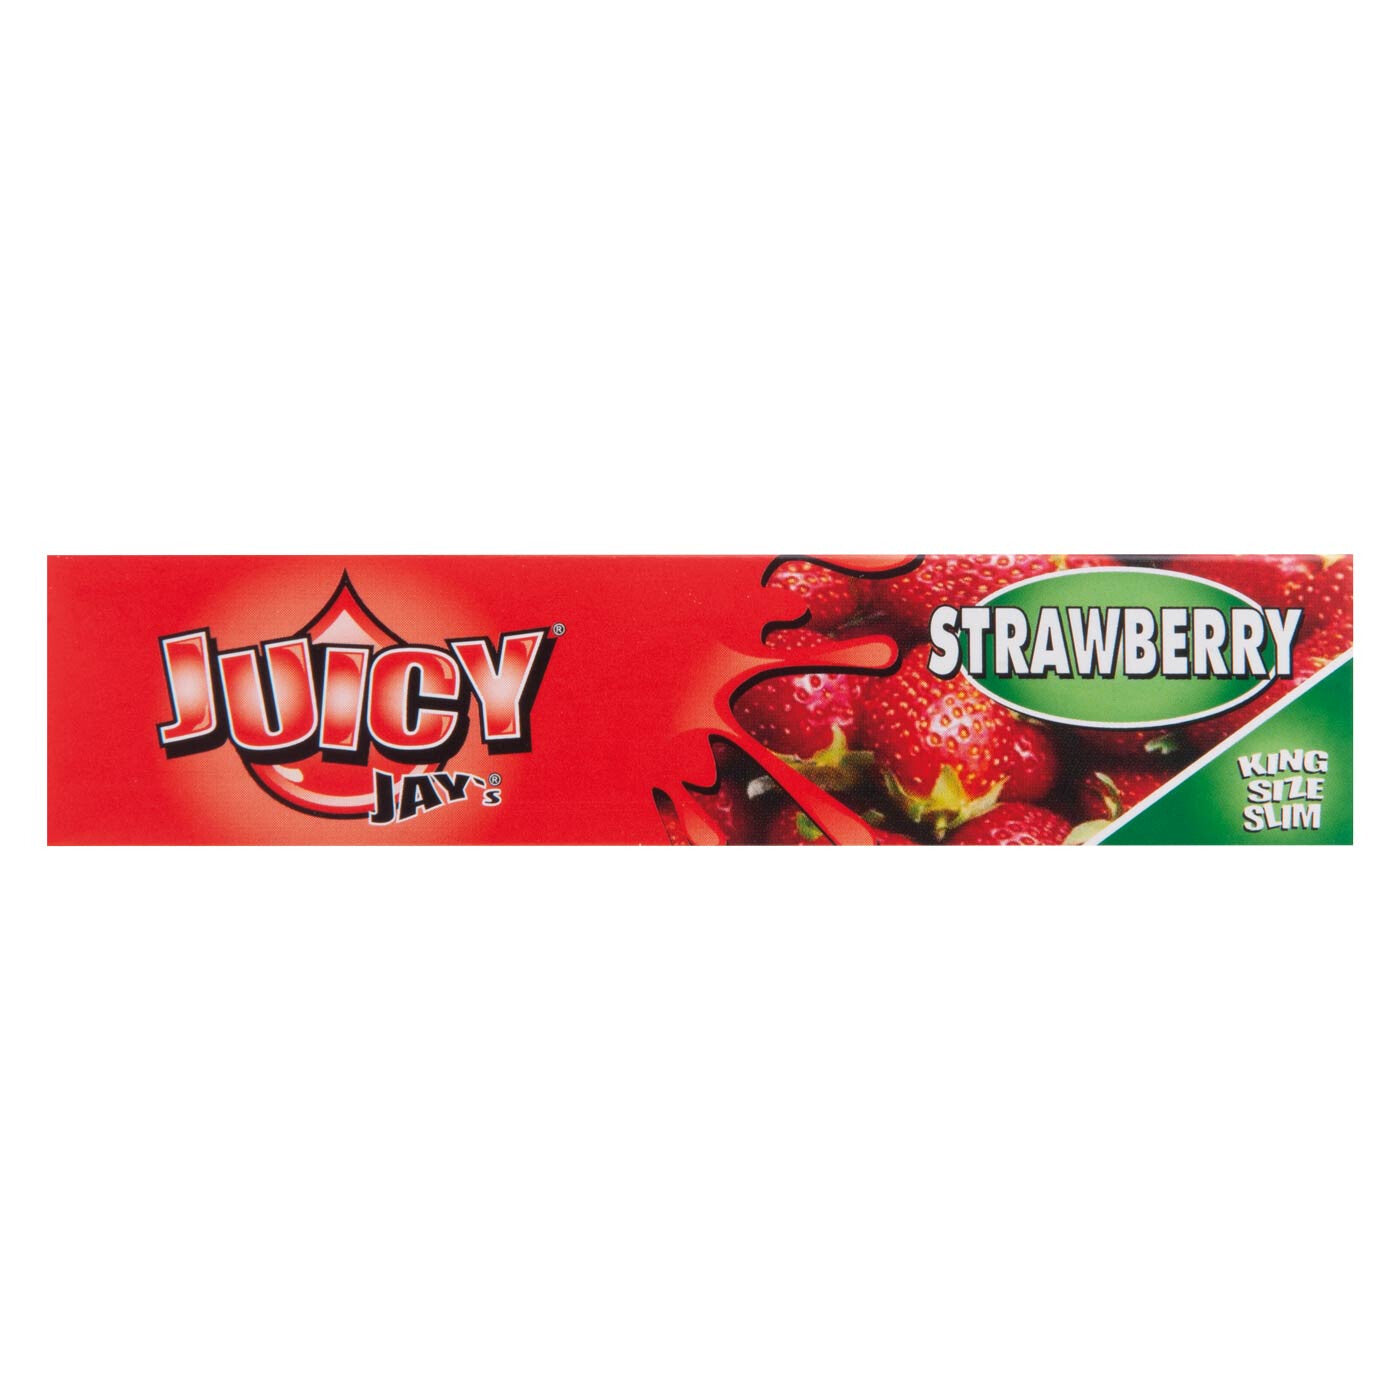 Juicy Jays Strawberry Kss 1 PC voorkant